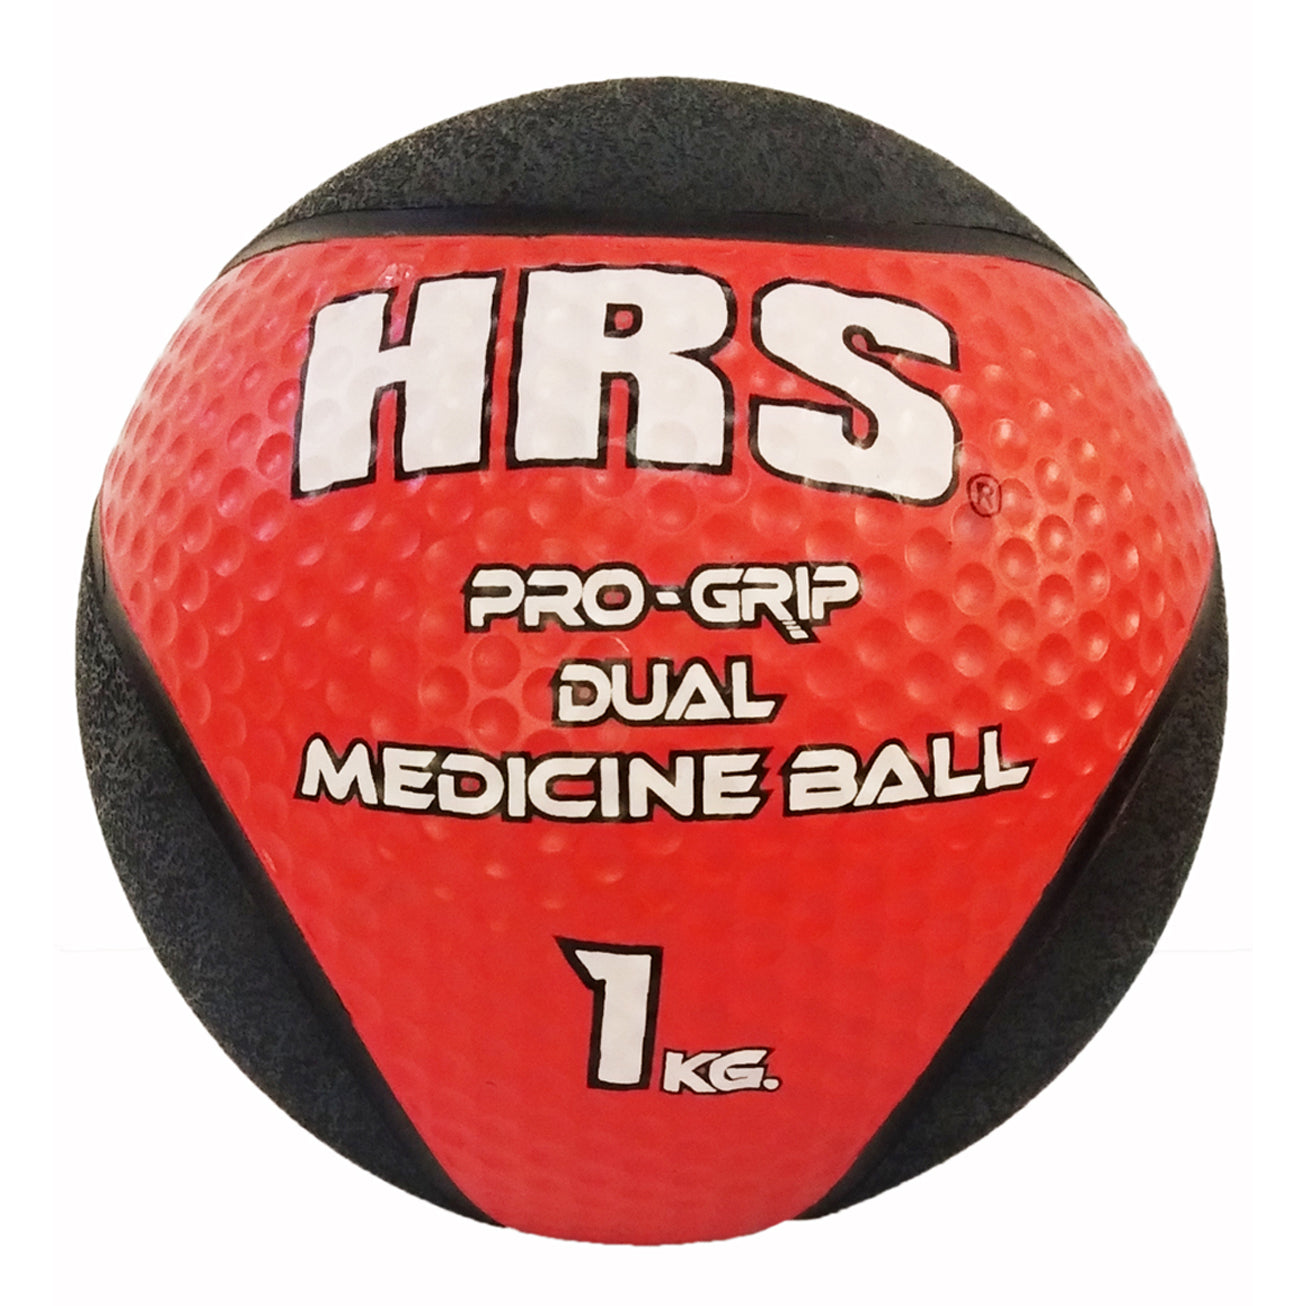 HRS Rubber Medicine Ball, 1 kg (without handle), Red/Black - Best Price online Prokicksports.com